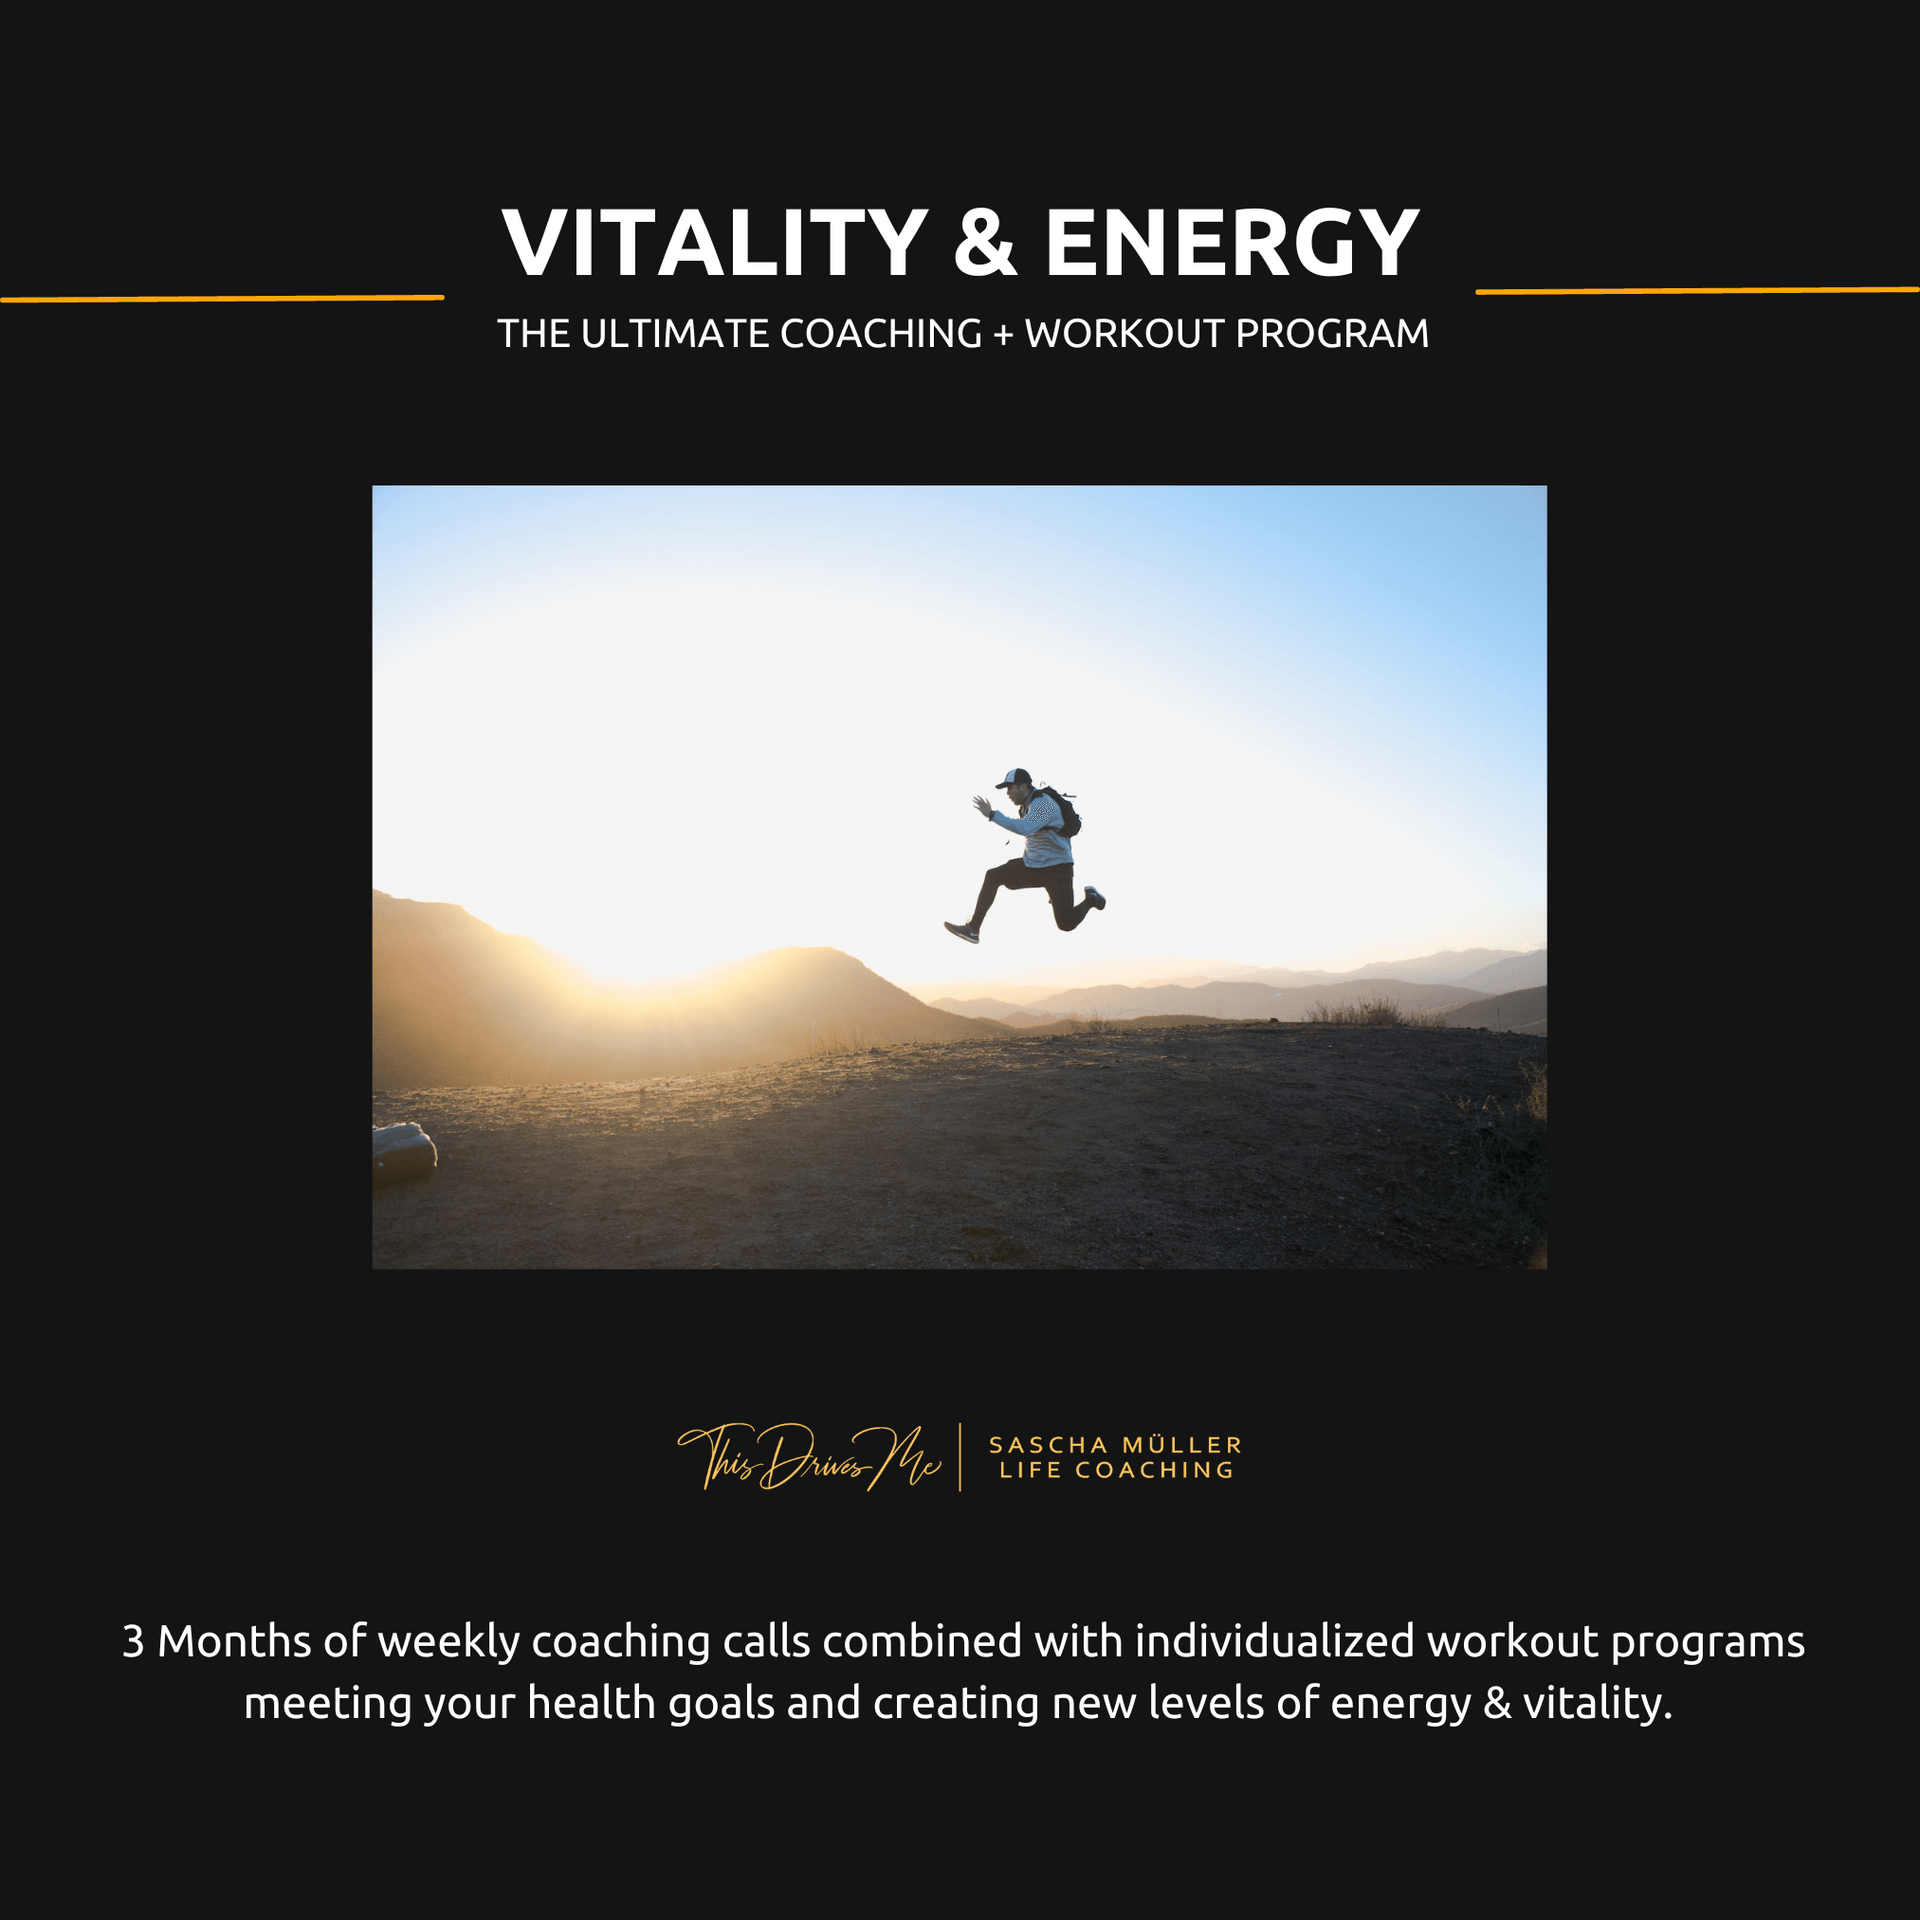 "Energy & Vitality"